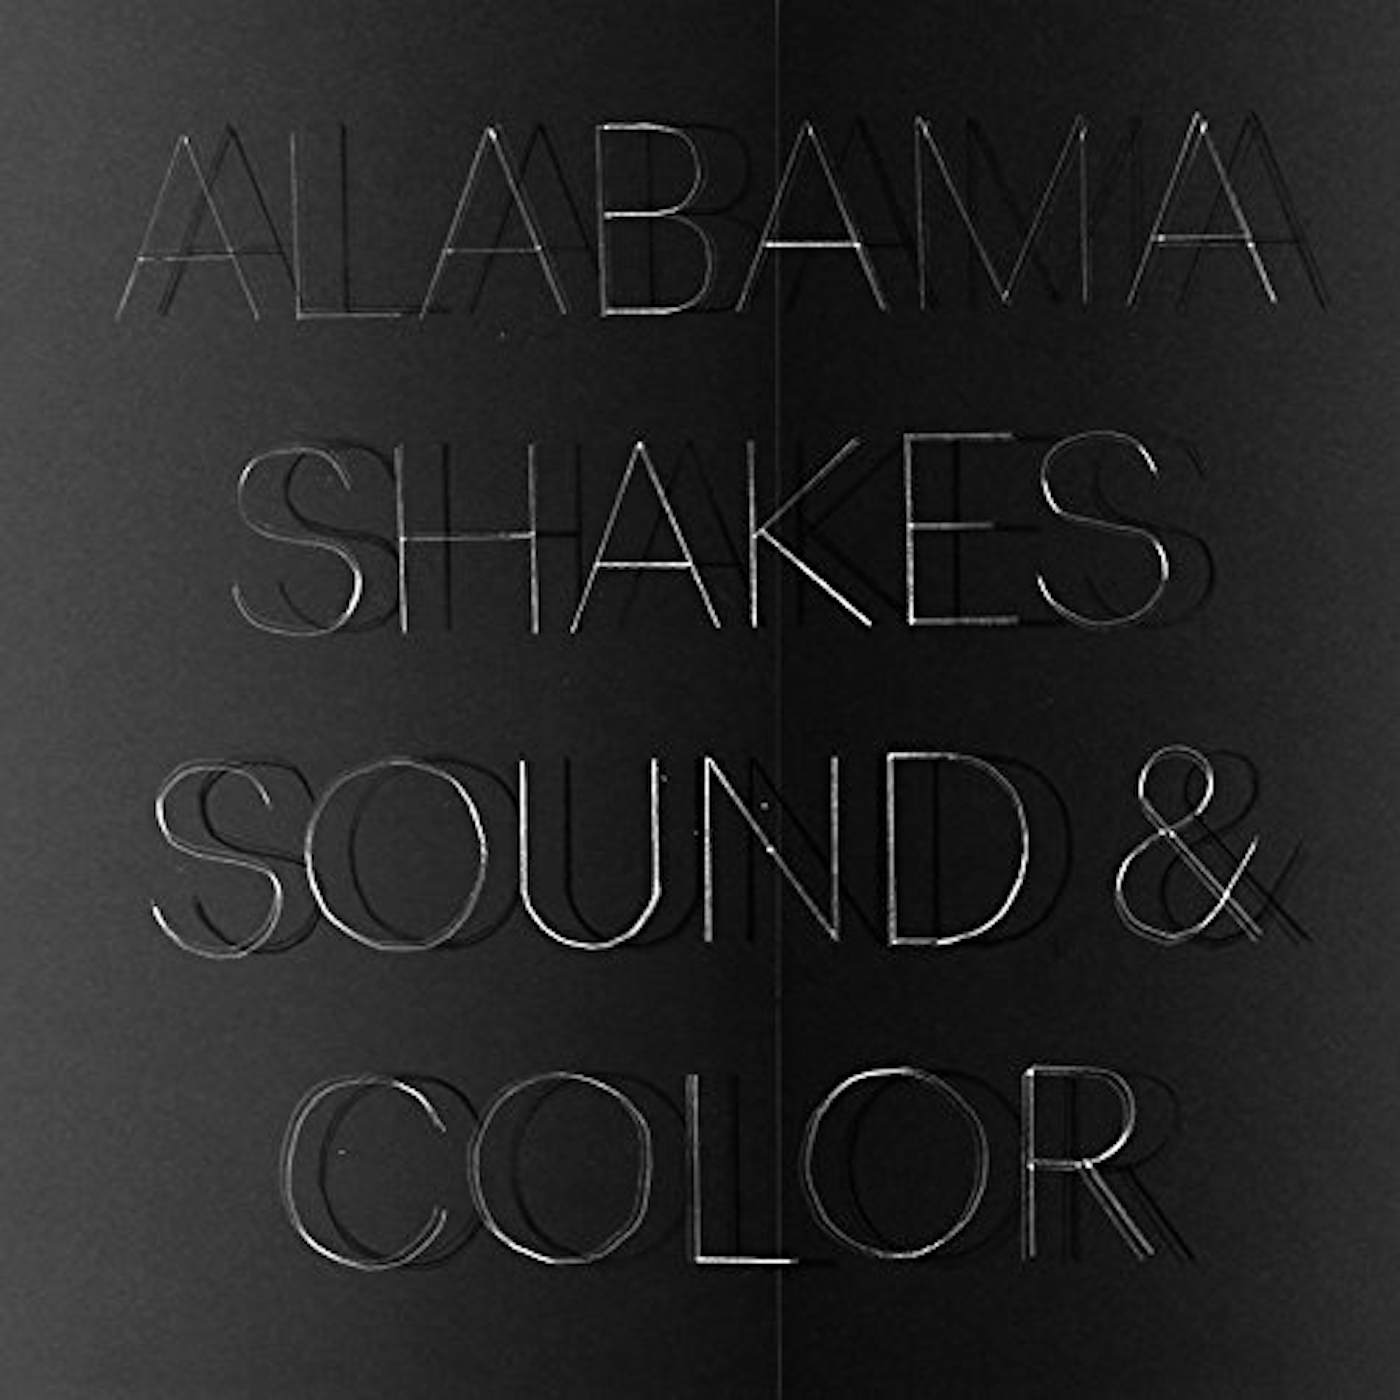 Alabama Shakes Sound & Color Vinyl Record